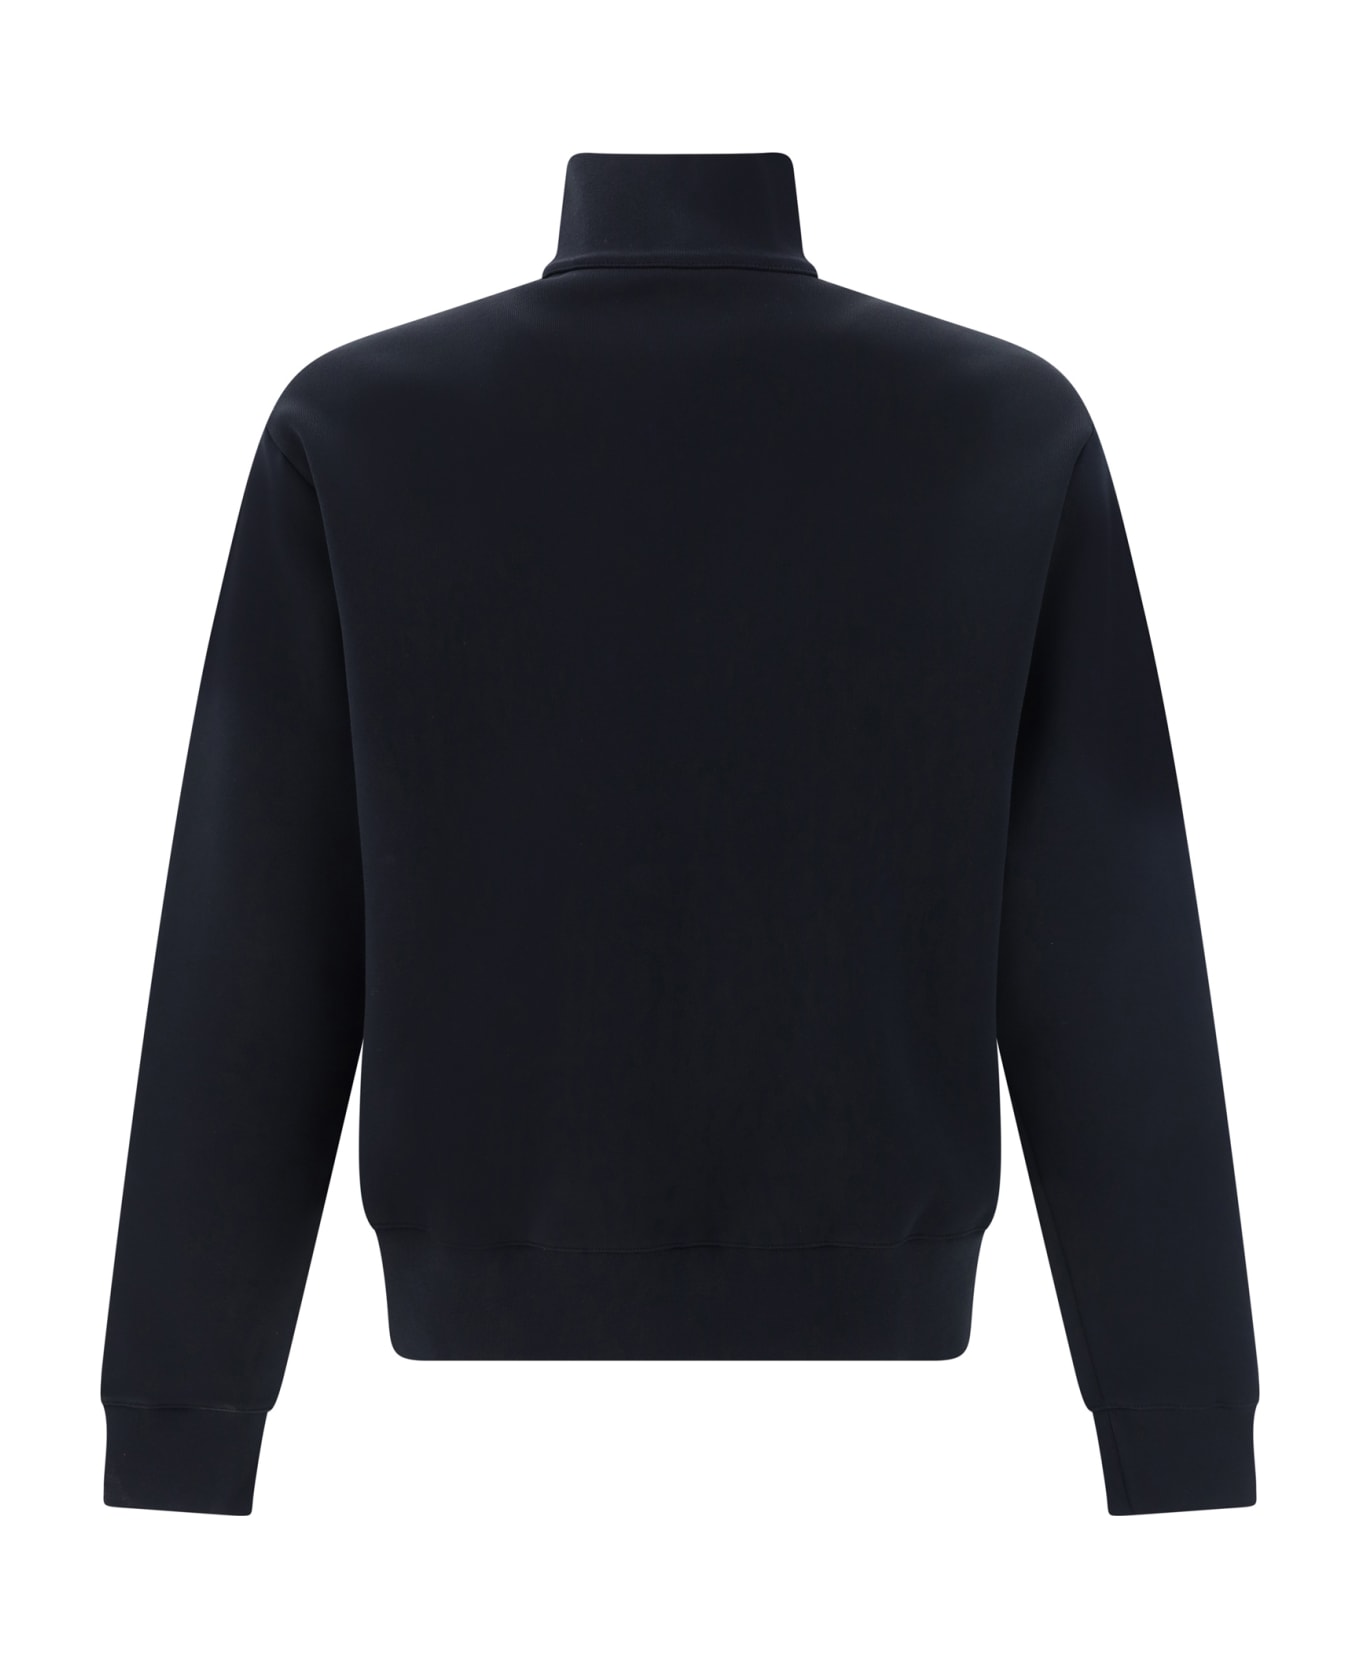 Burberry Zipper Sweatshirt - Black